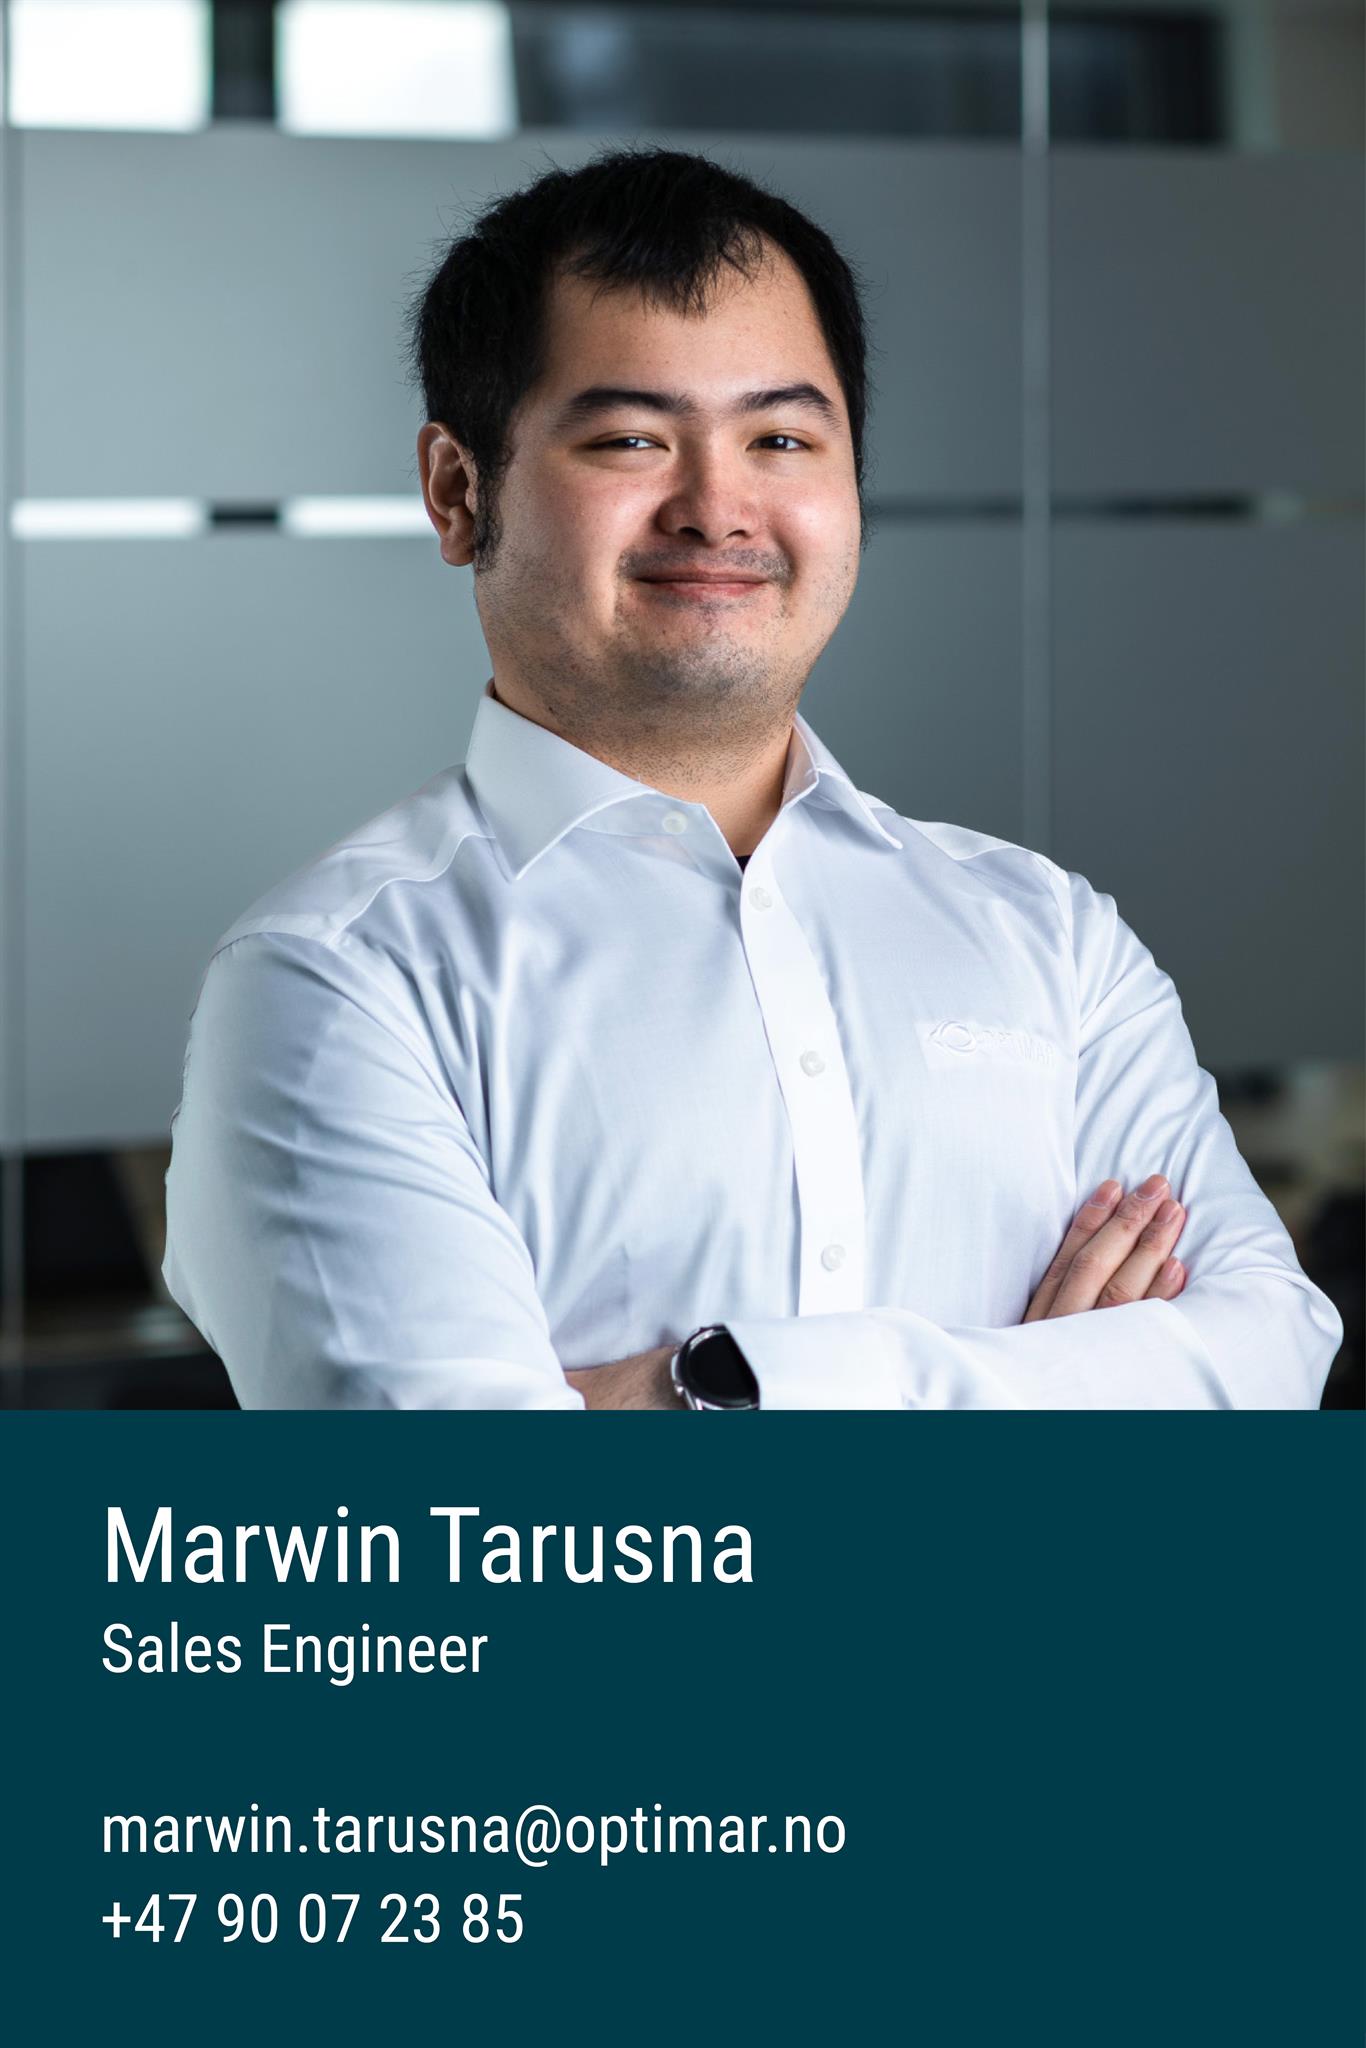 Marwin Tarusna